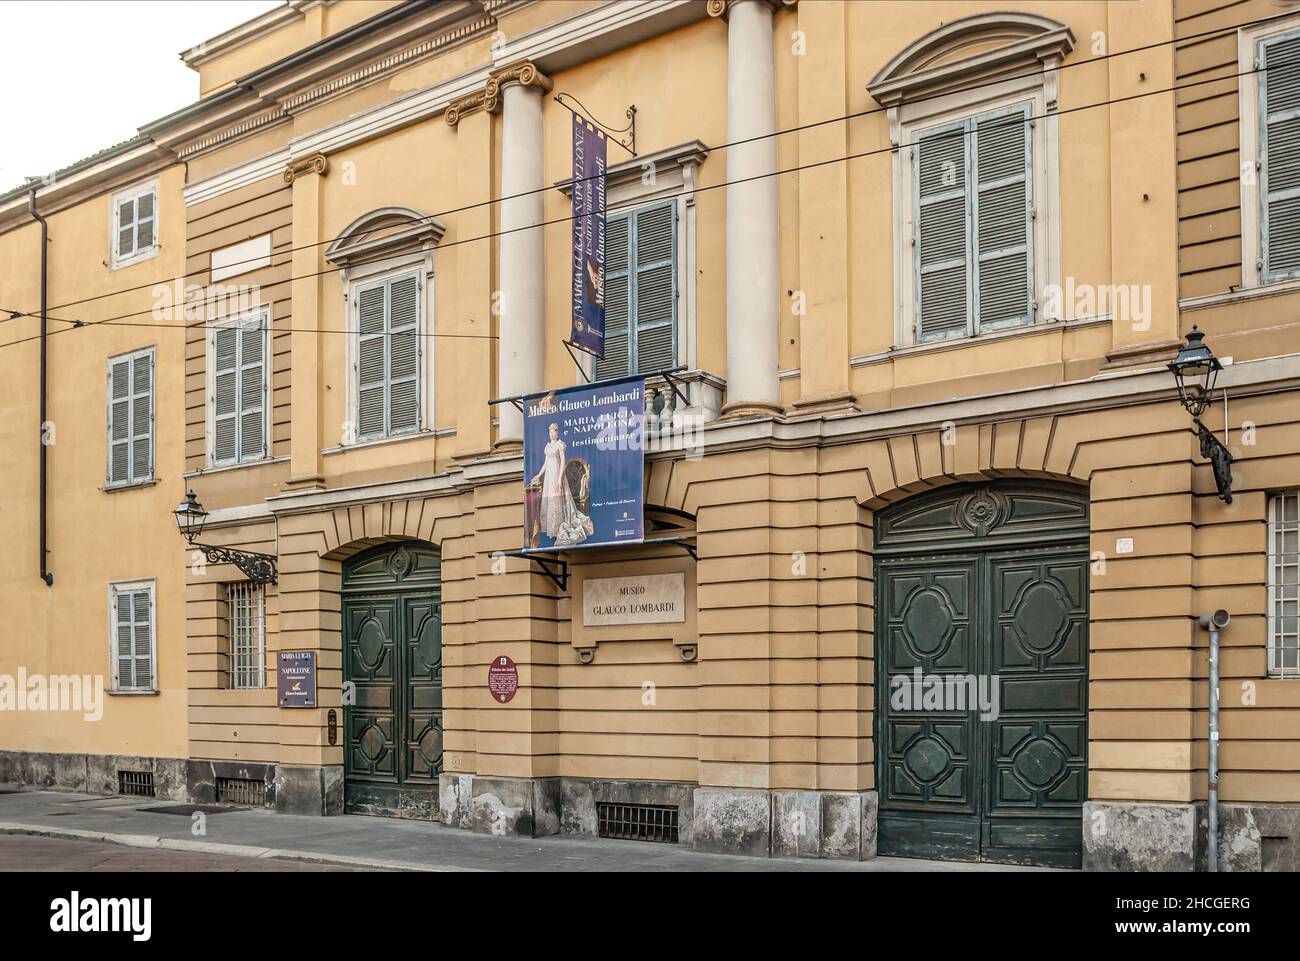 Museo Glauco Lombardi in Parma, Emilia-Romagna, Italy. Stock Photo